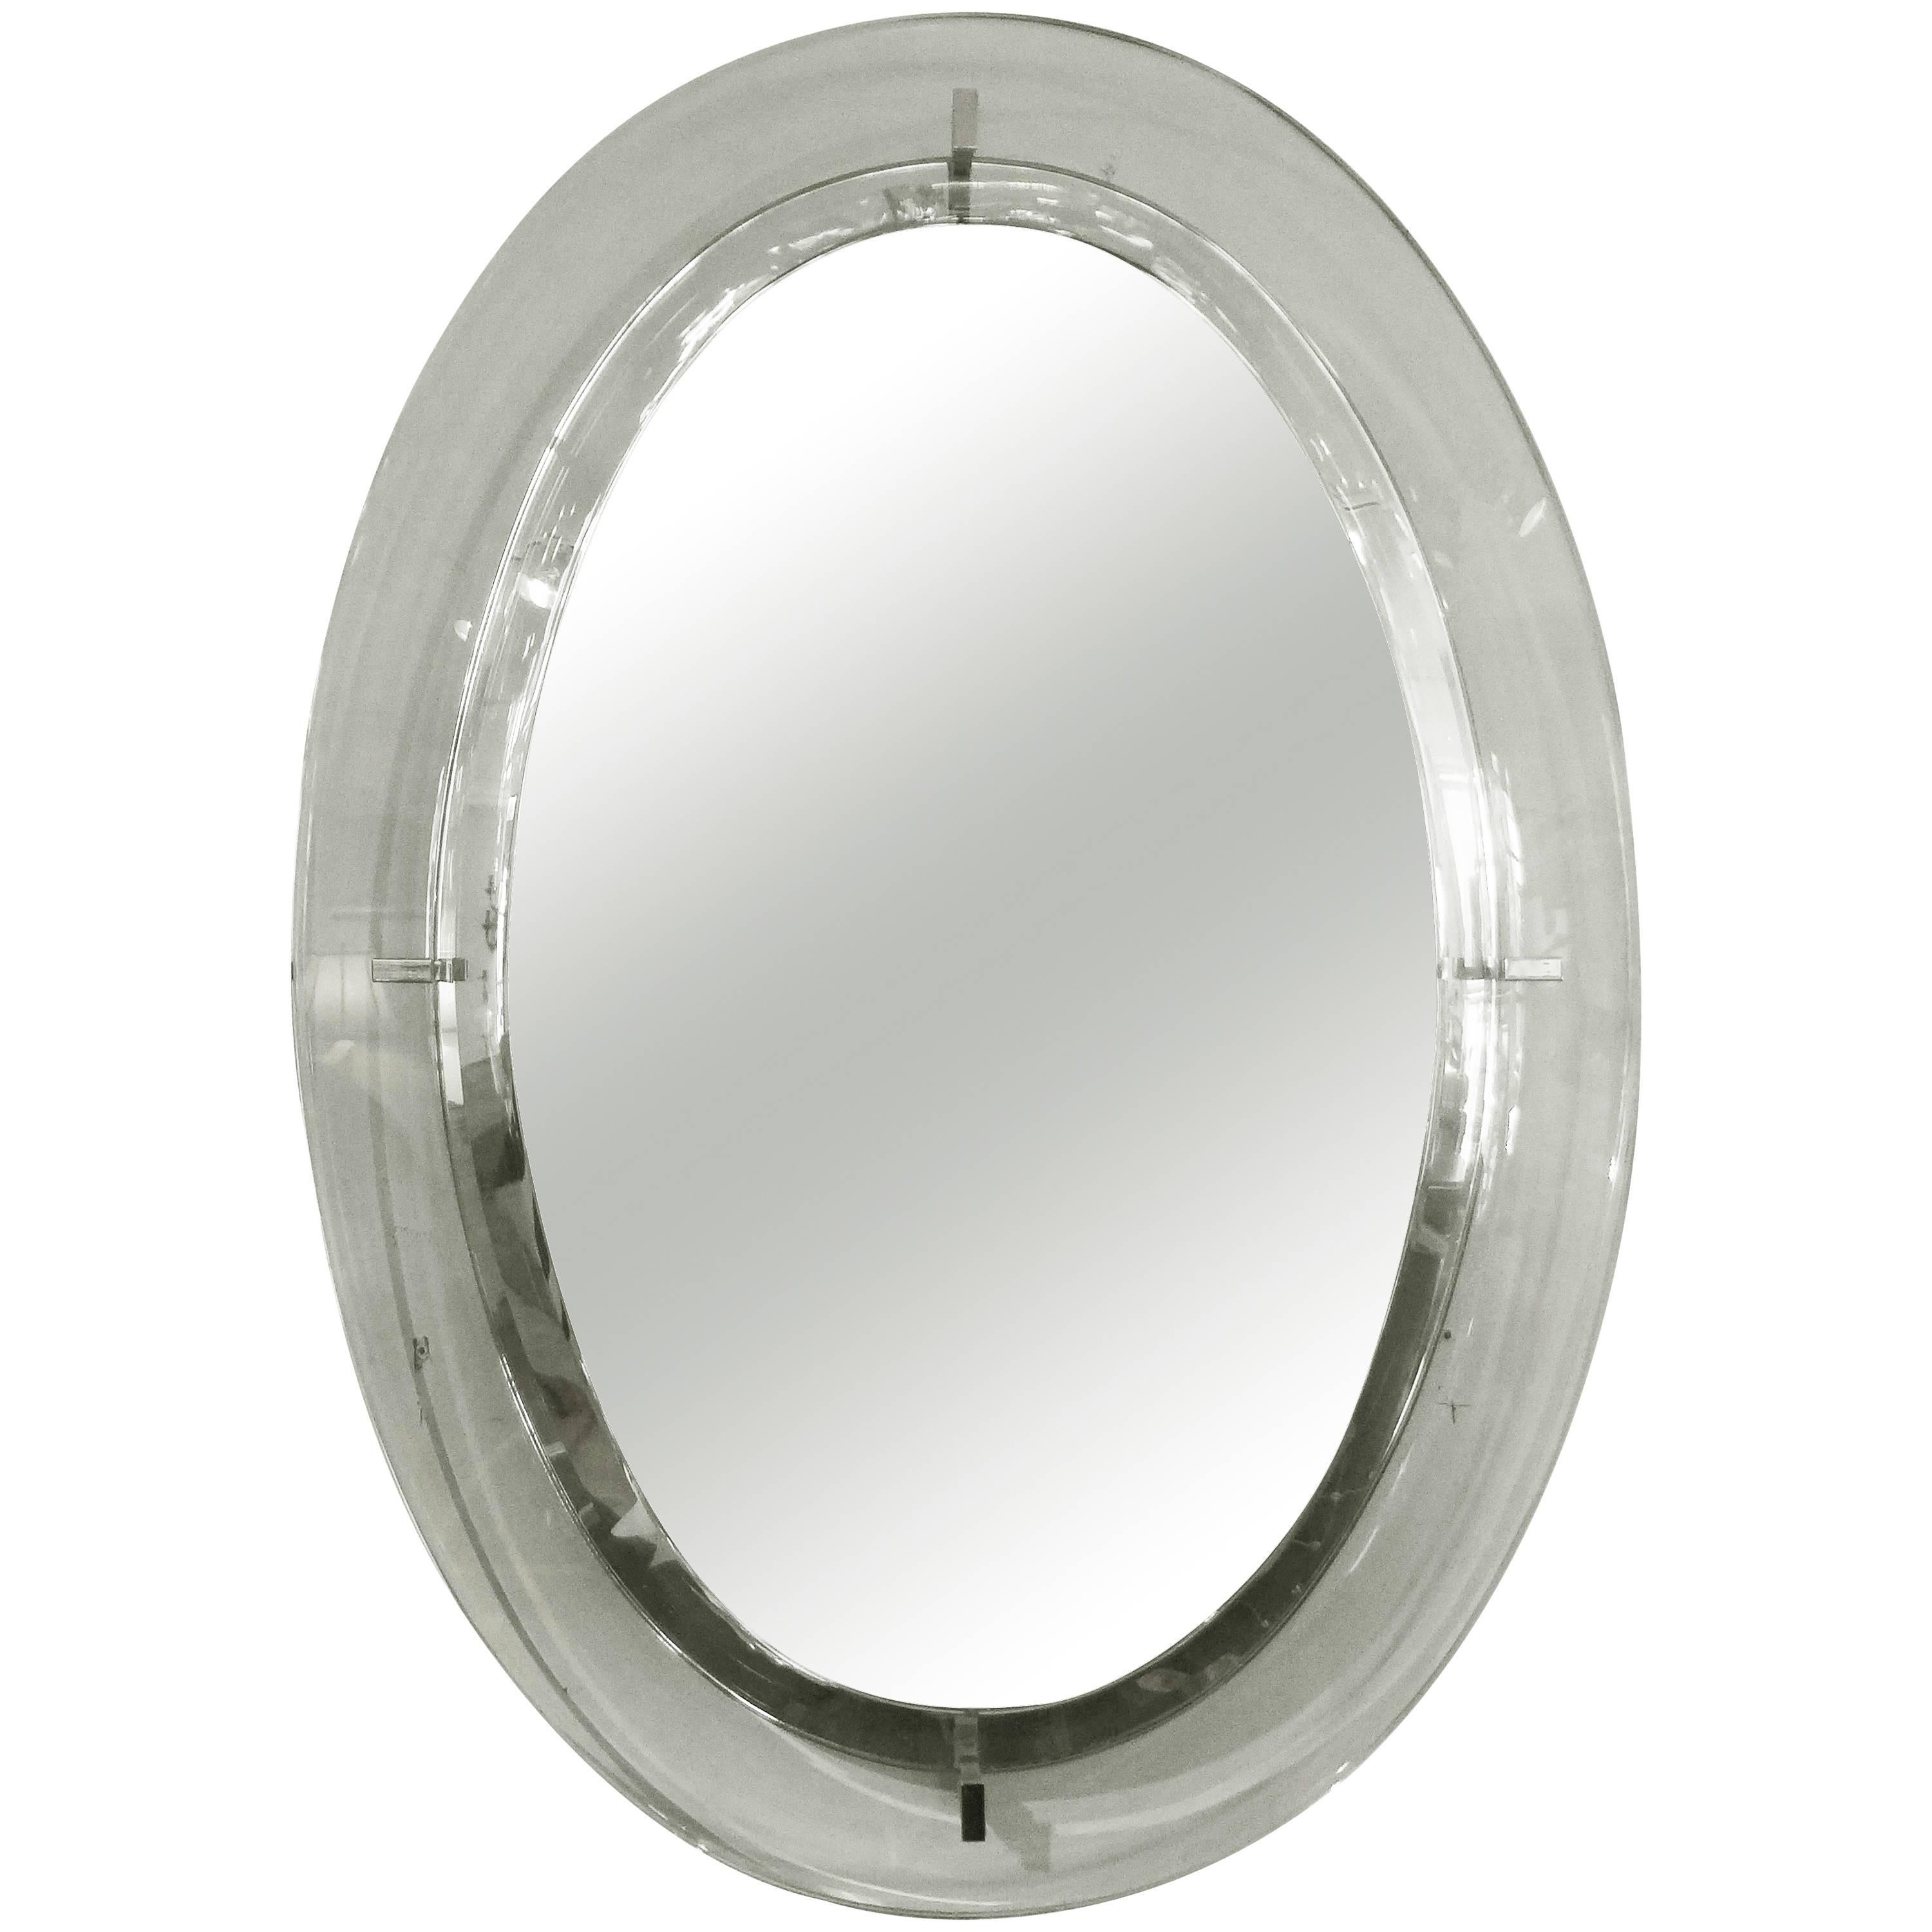 Italian Fontana Arte Inspired Mid-Century Modern Oval Mirror